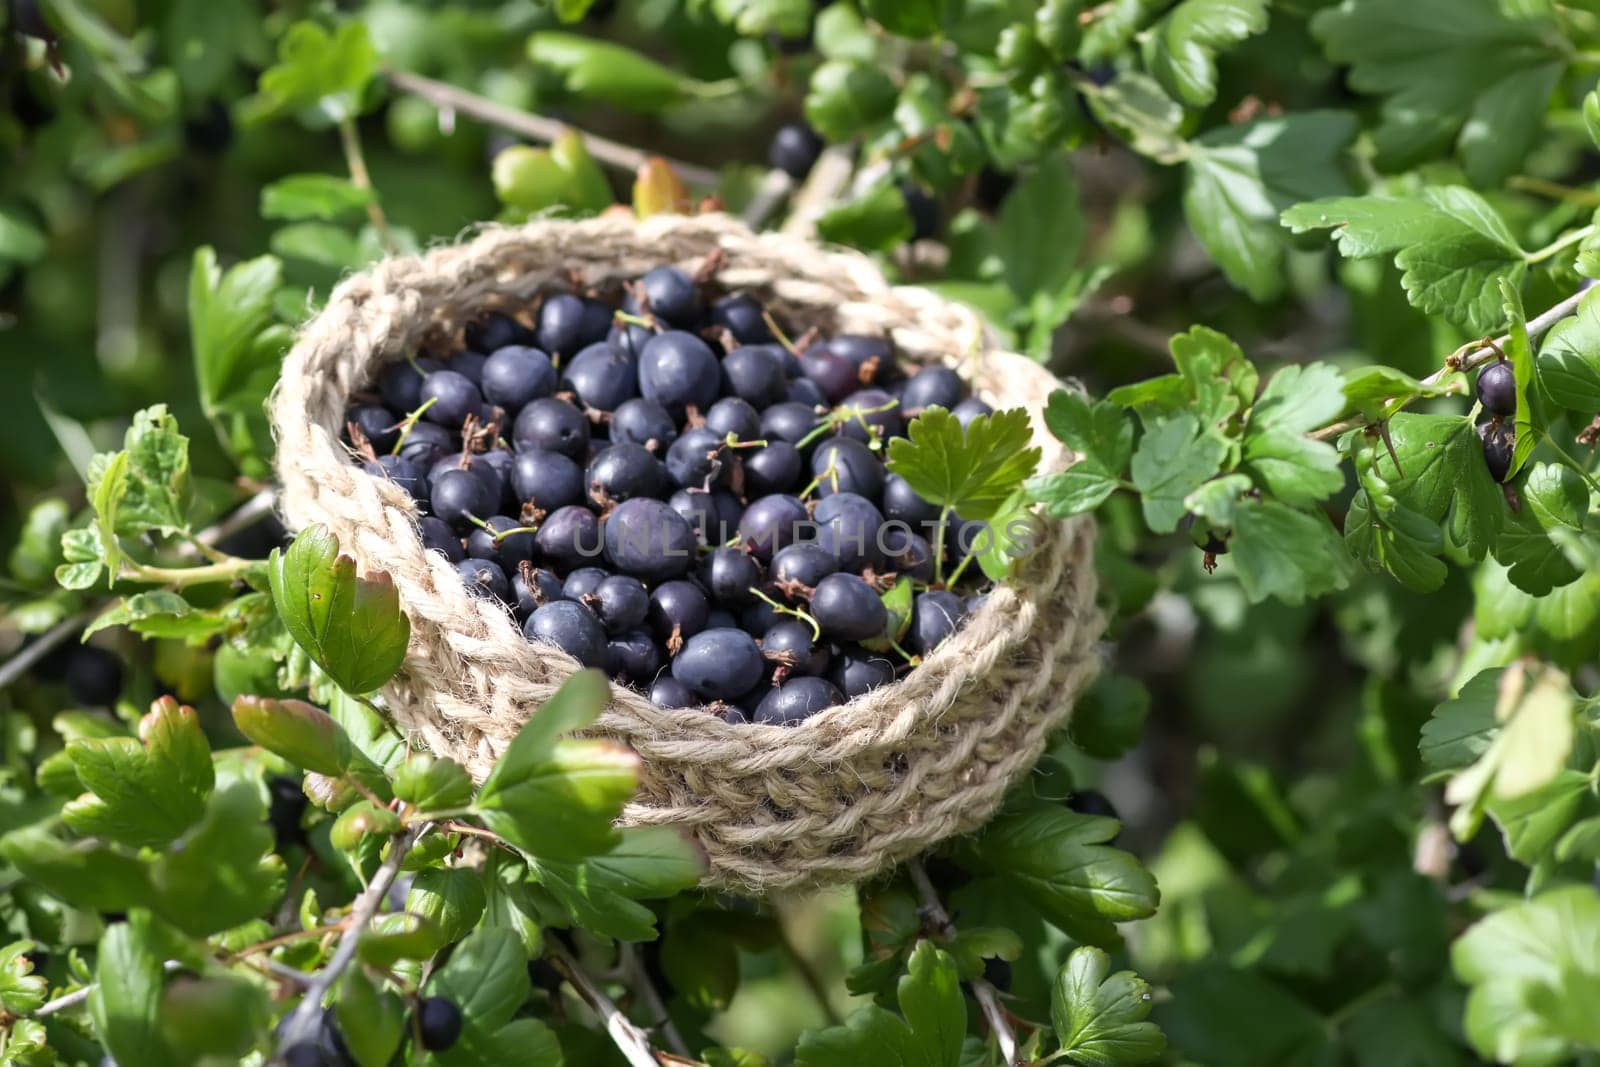 Juicy ripe berries of a gooseberry in a small handmade jute basket.